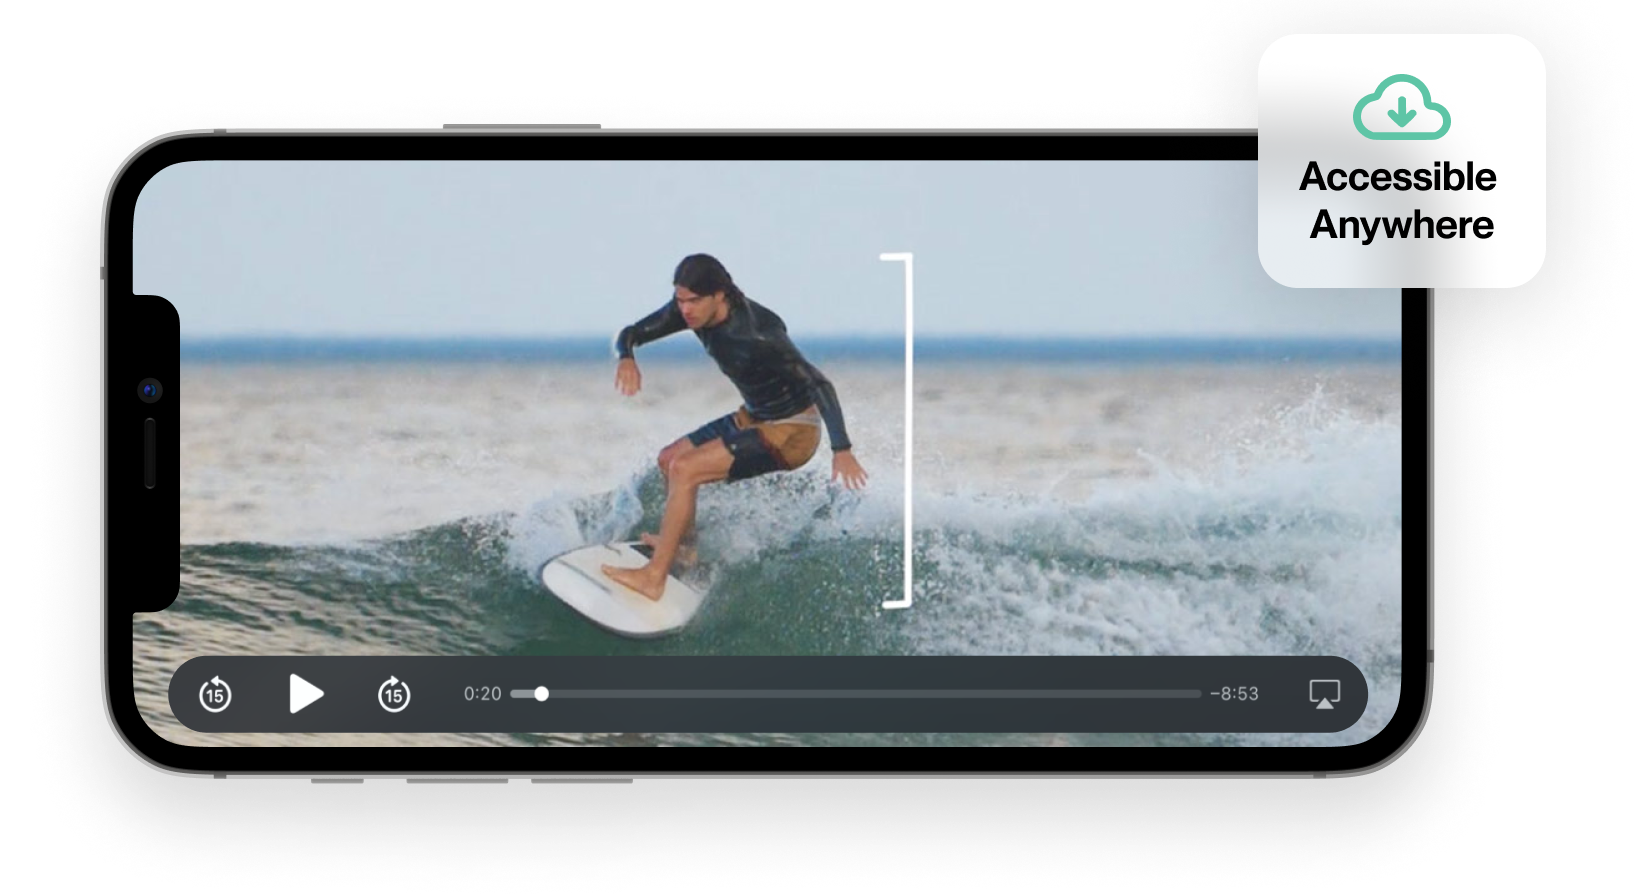 How to Surf - Download Surfing Tutorials